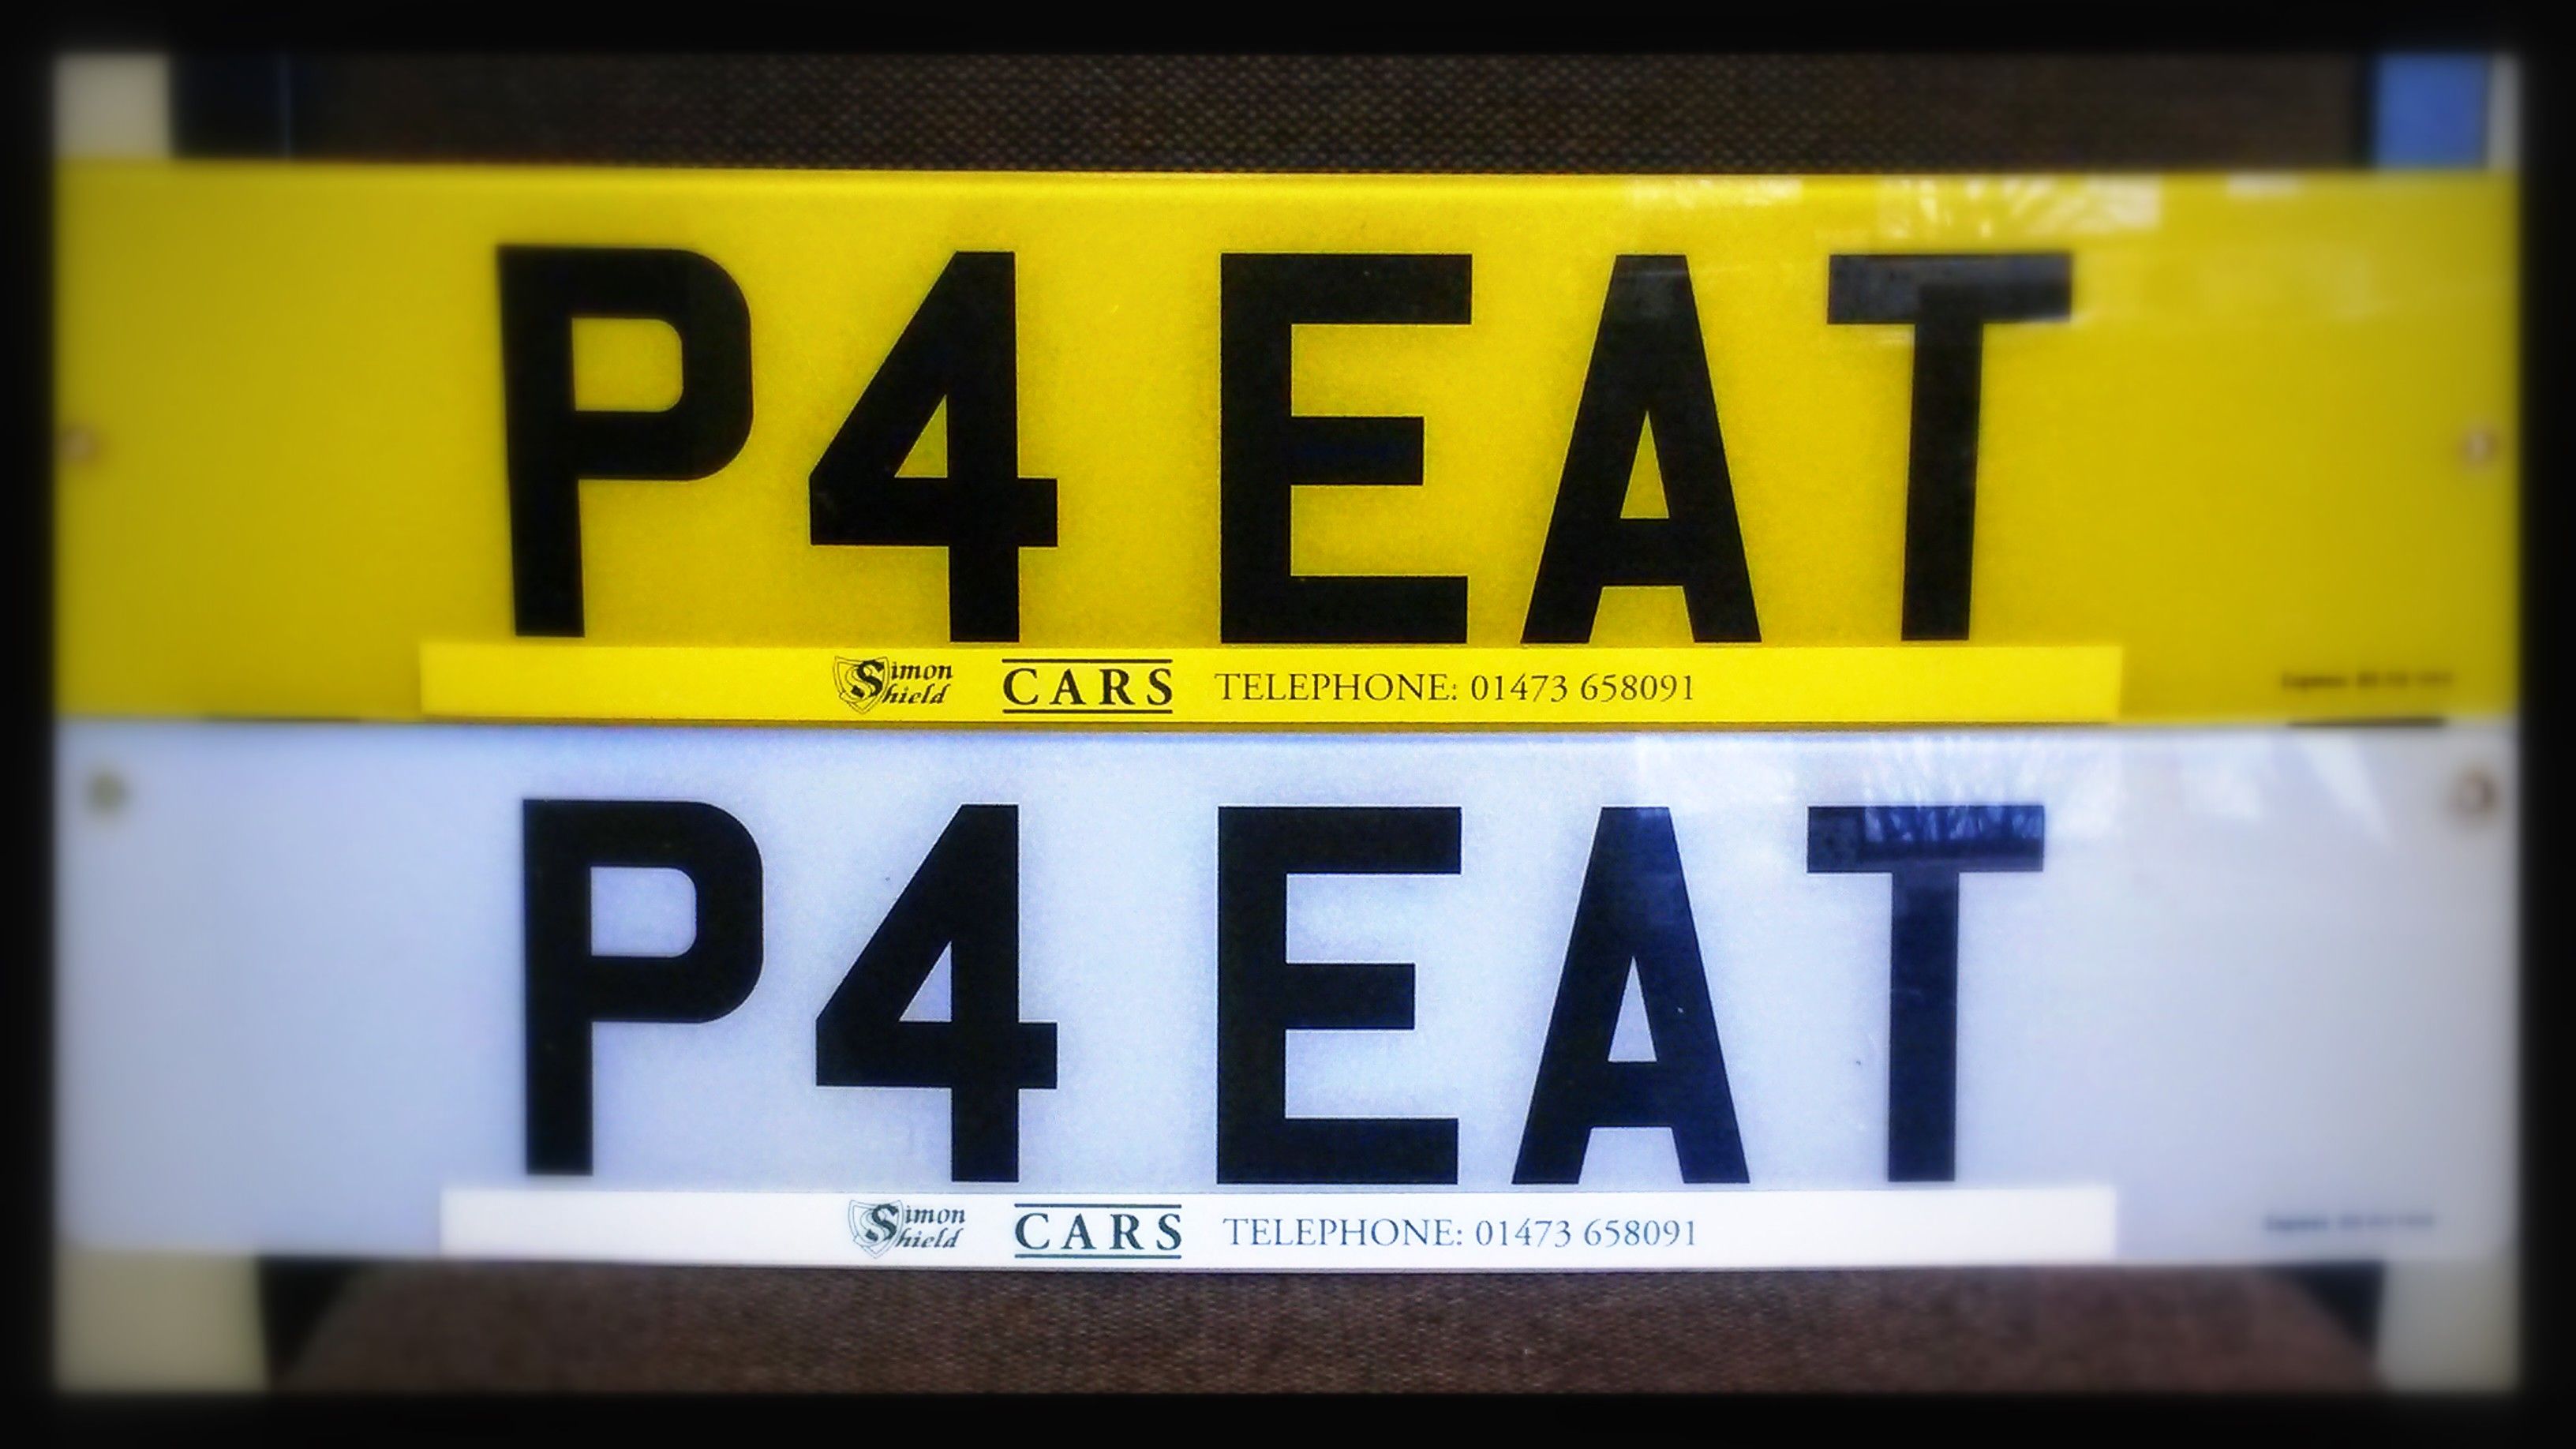 Cherished Number Plates